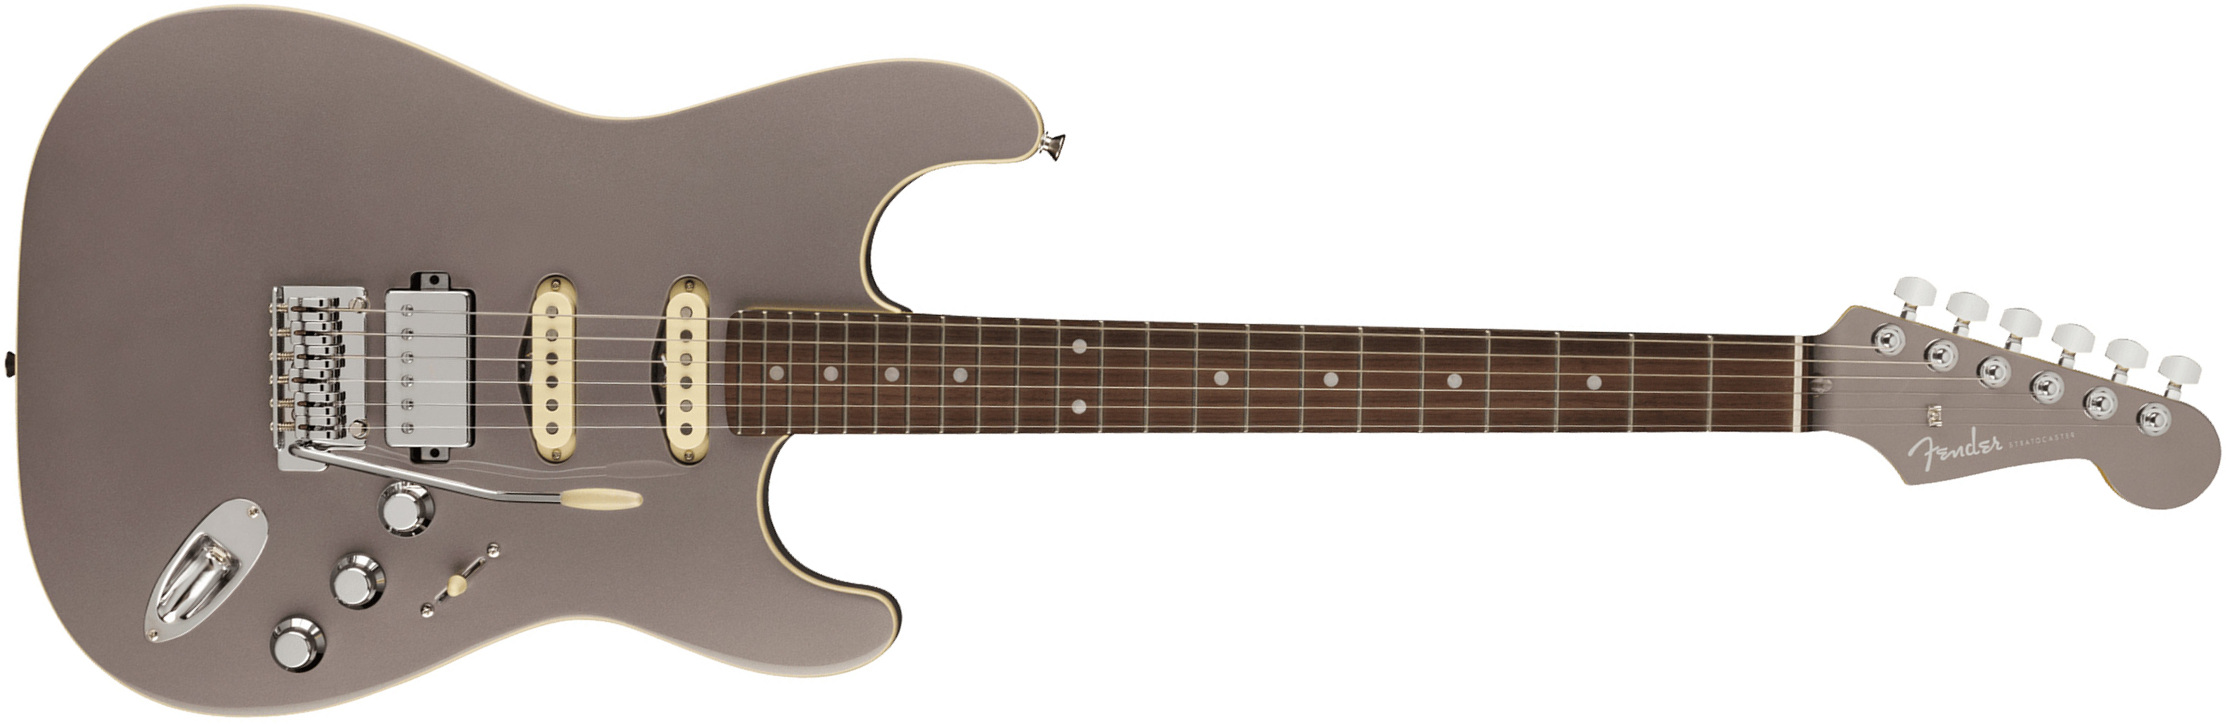 Fender Strat Aerodyne Special Jap Trem Hss Rw - Dolphin Gray Metallic - Str shape electric guitar - Main picture